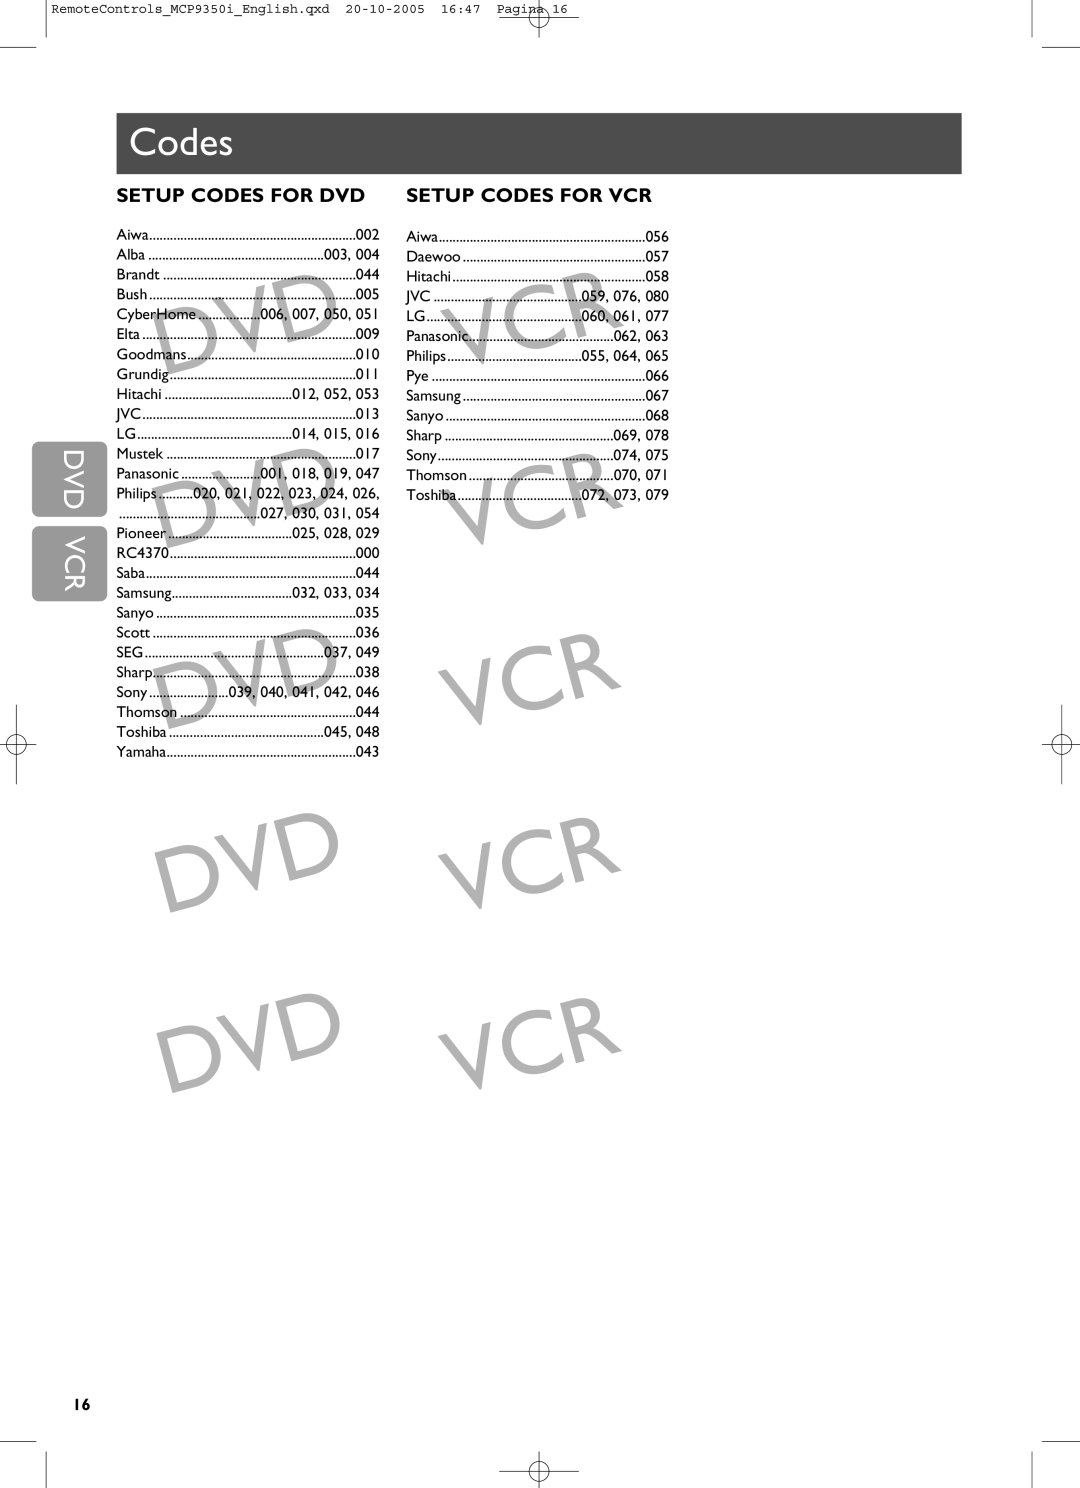 Philips RC4370 user manual Dvd Vcr Dvd Vcr, Setup Codes For Dvd Setup Codes For Vcr 